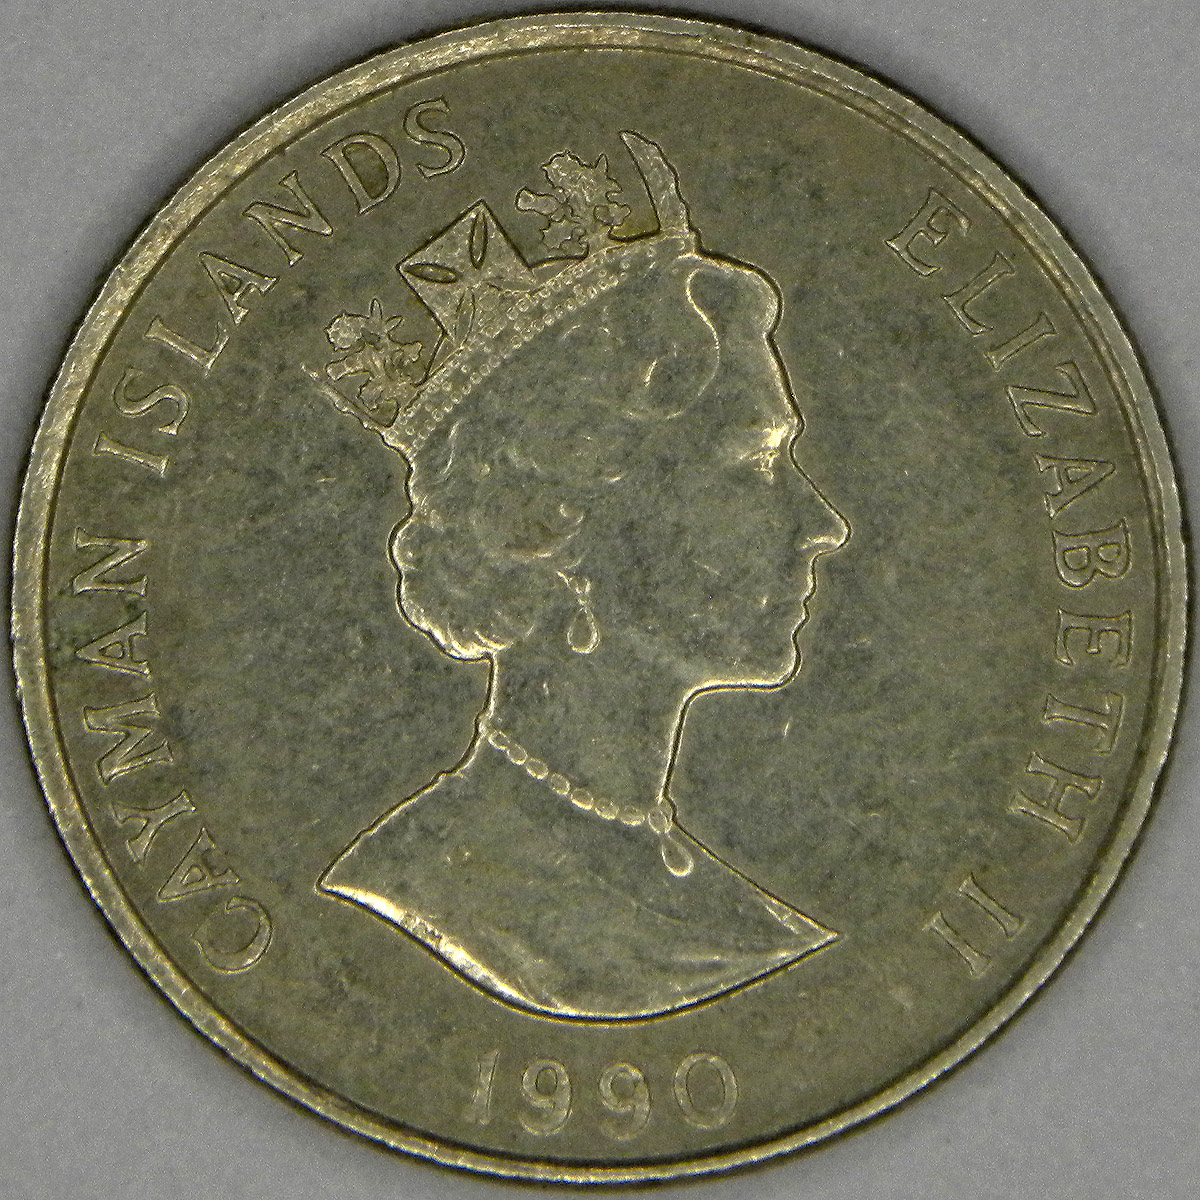 1990 Cayman Islands 25 cent coin (obverse)